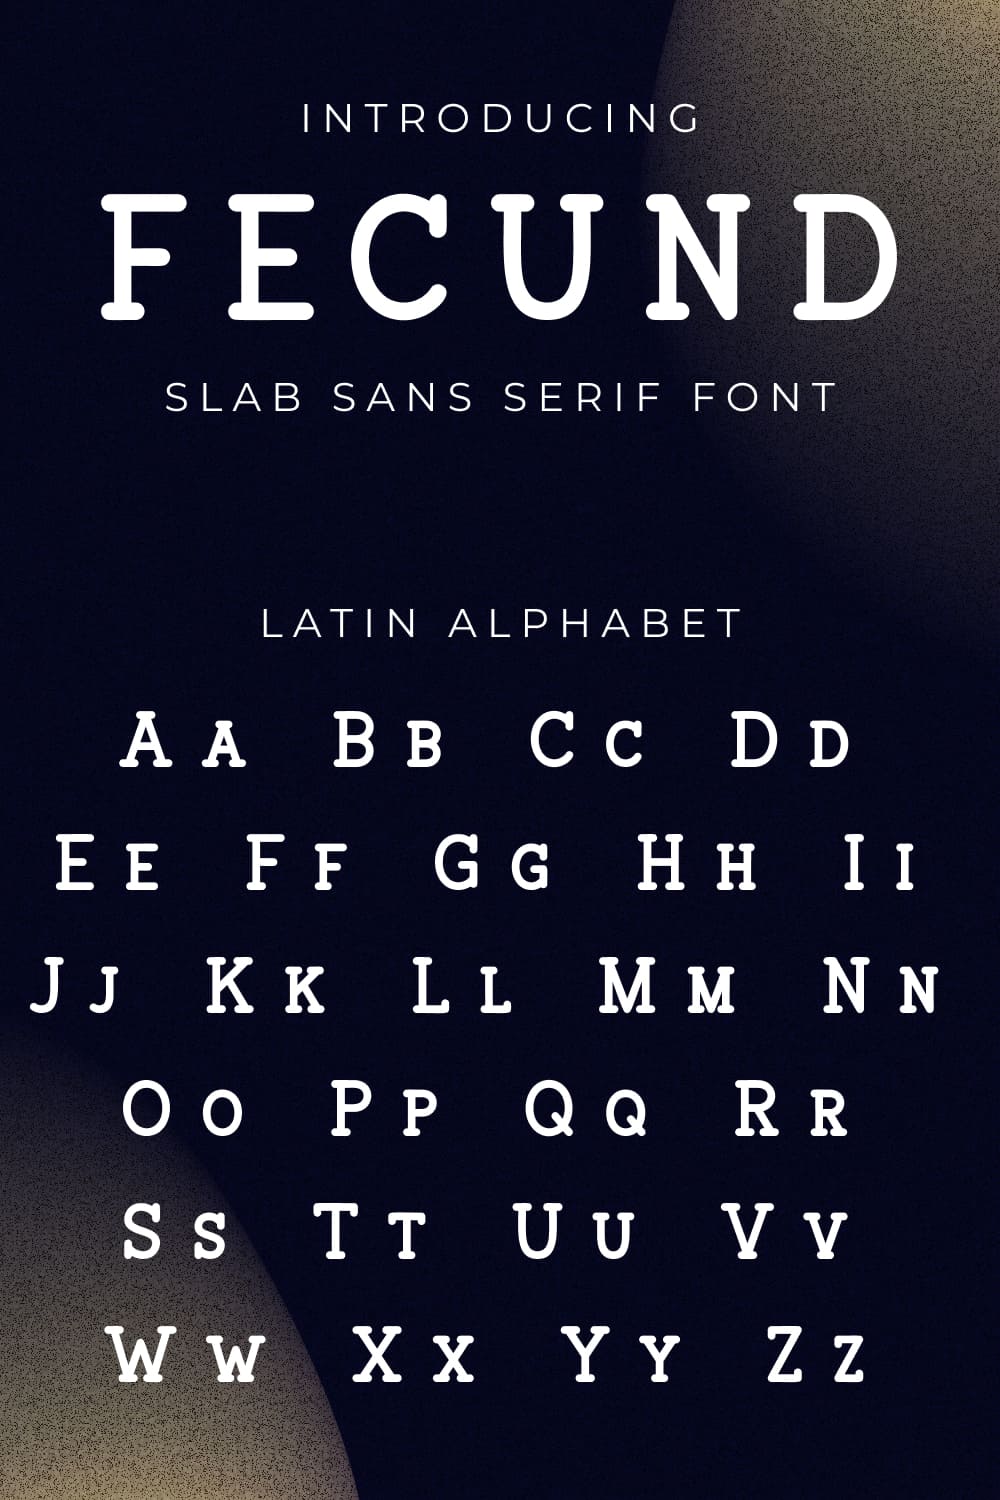 Fecund Slab Sans Serif Font MasterBundles pinterest collage image with latin alphabet.